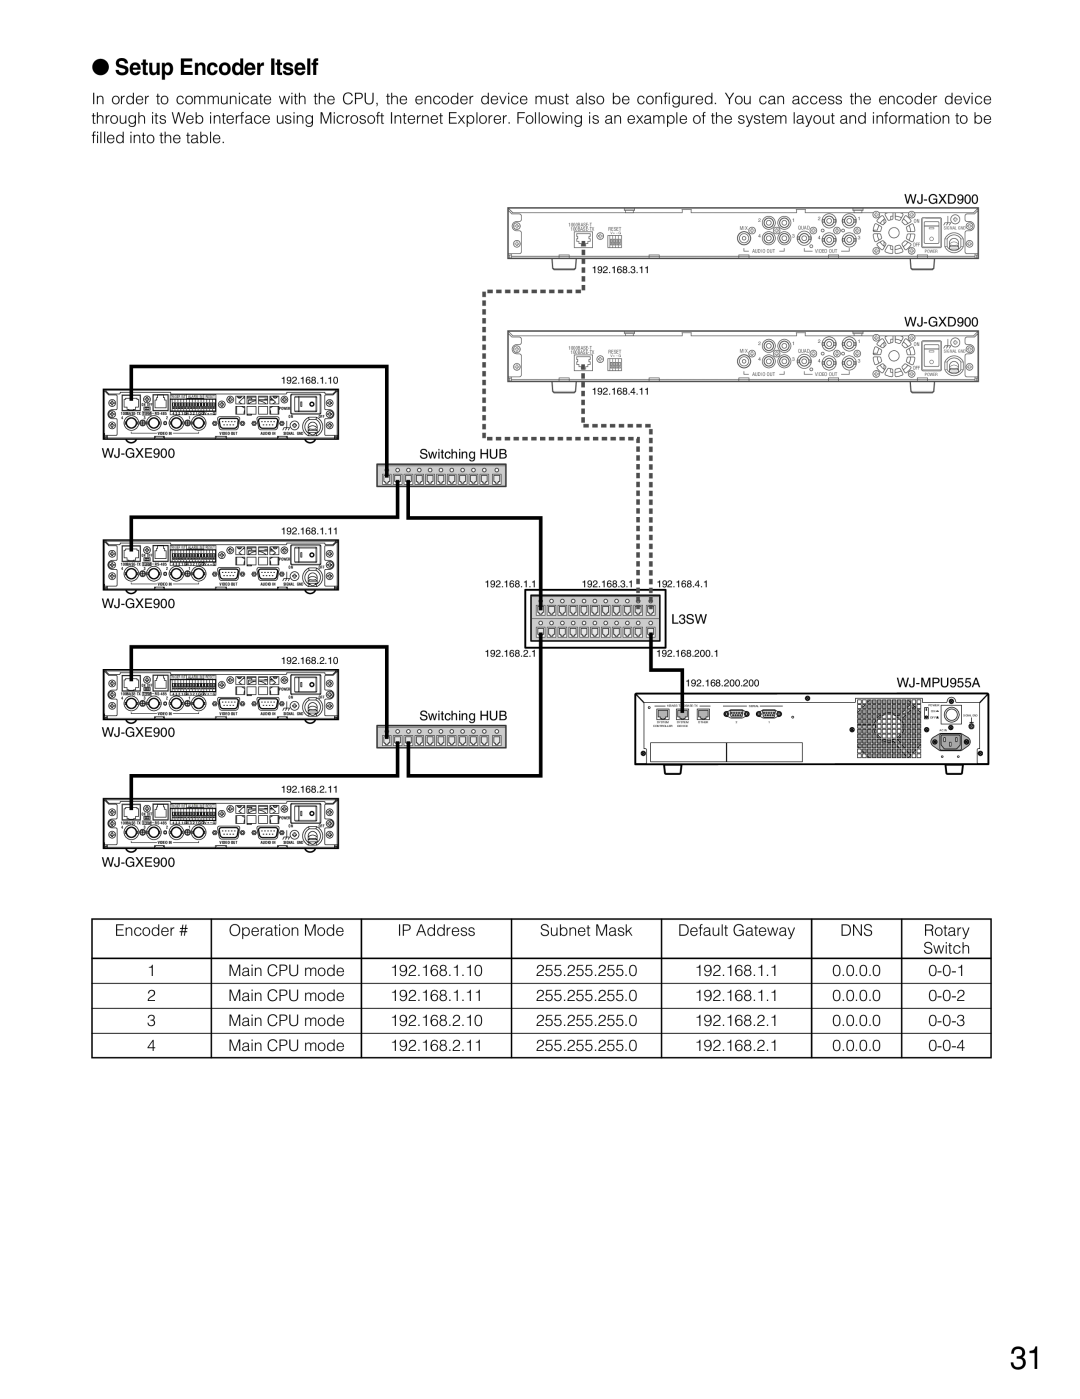 Panasonic WJ-MPU955A manual Setup Encoder Itself 